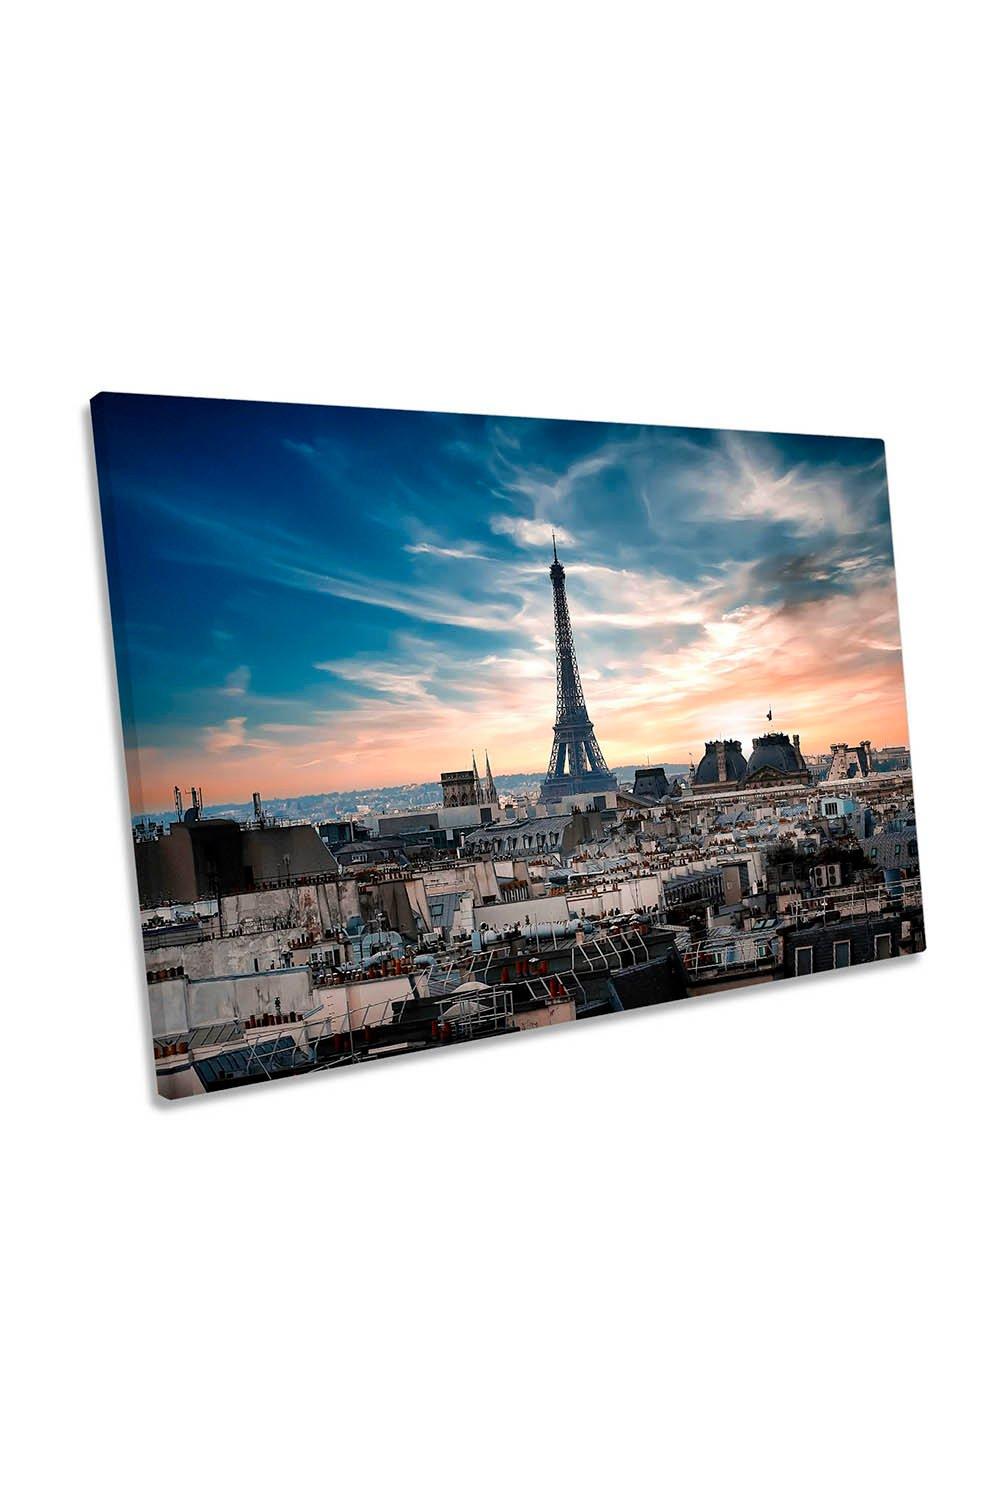 Paris France City Skyline Eiffel Tower Canvas Wall Art Picture Print